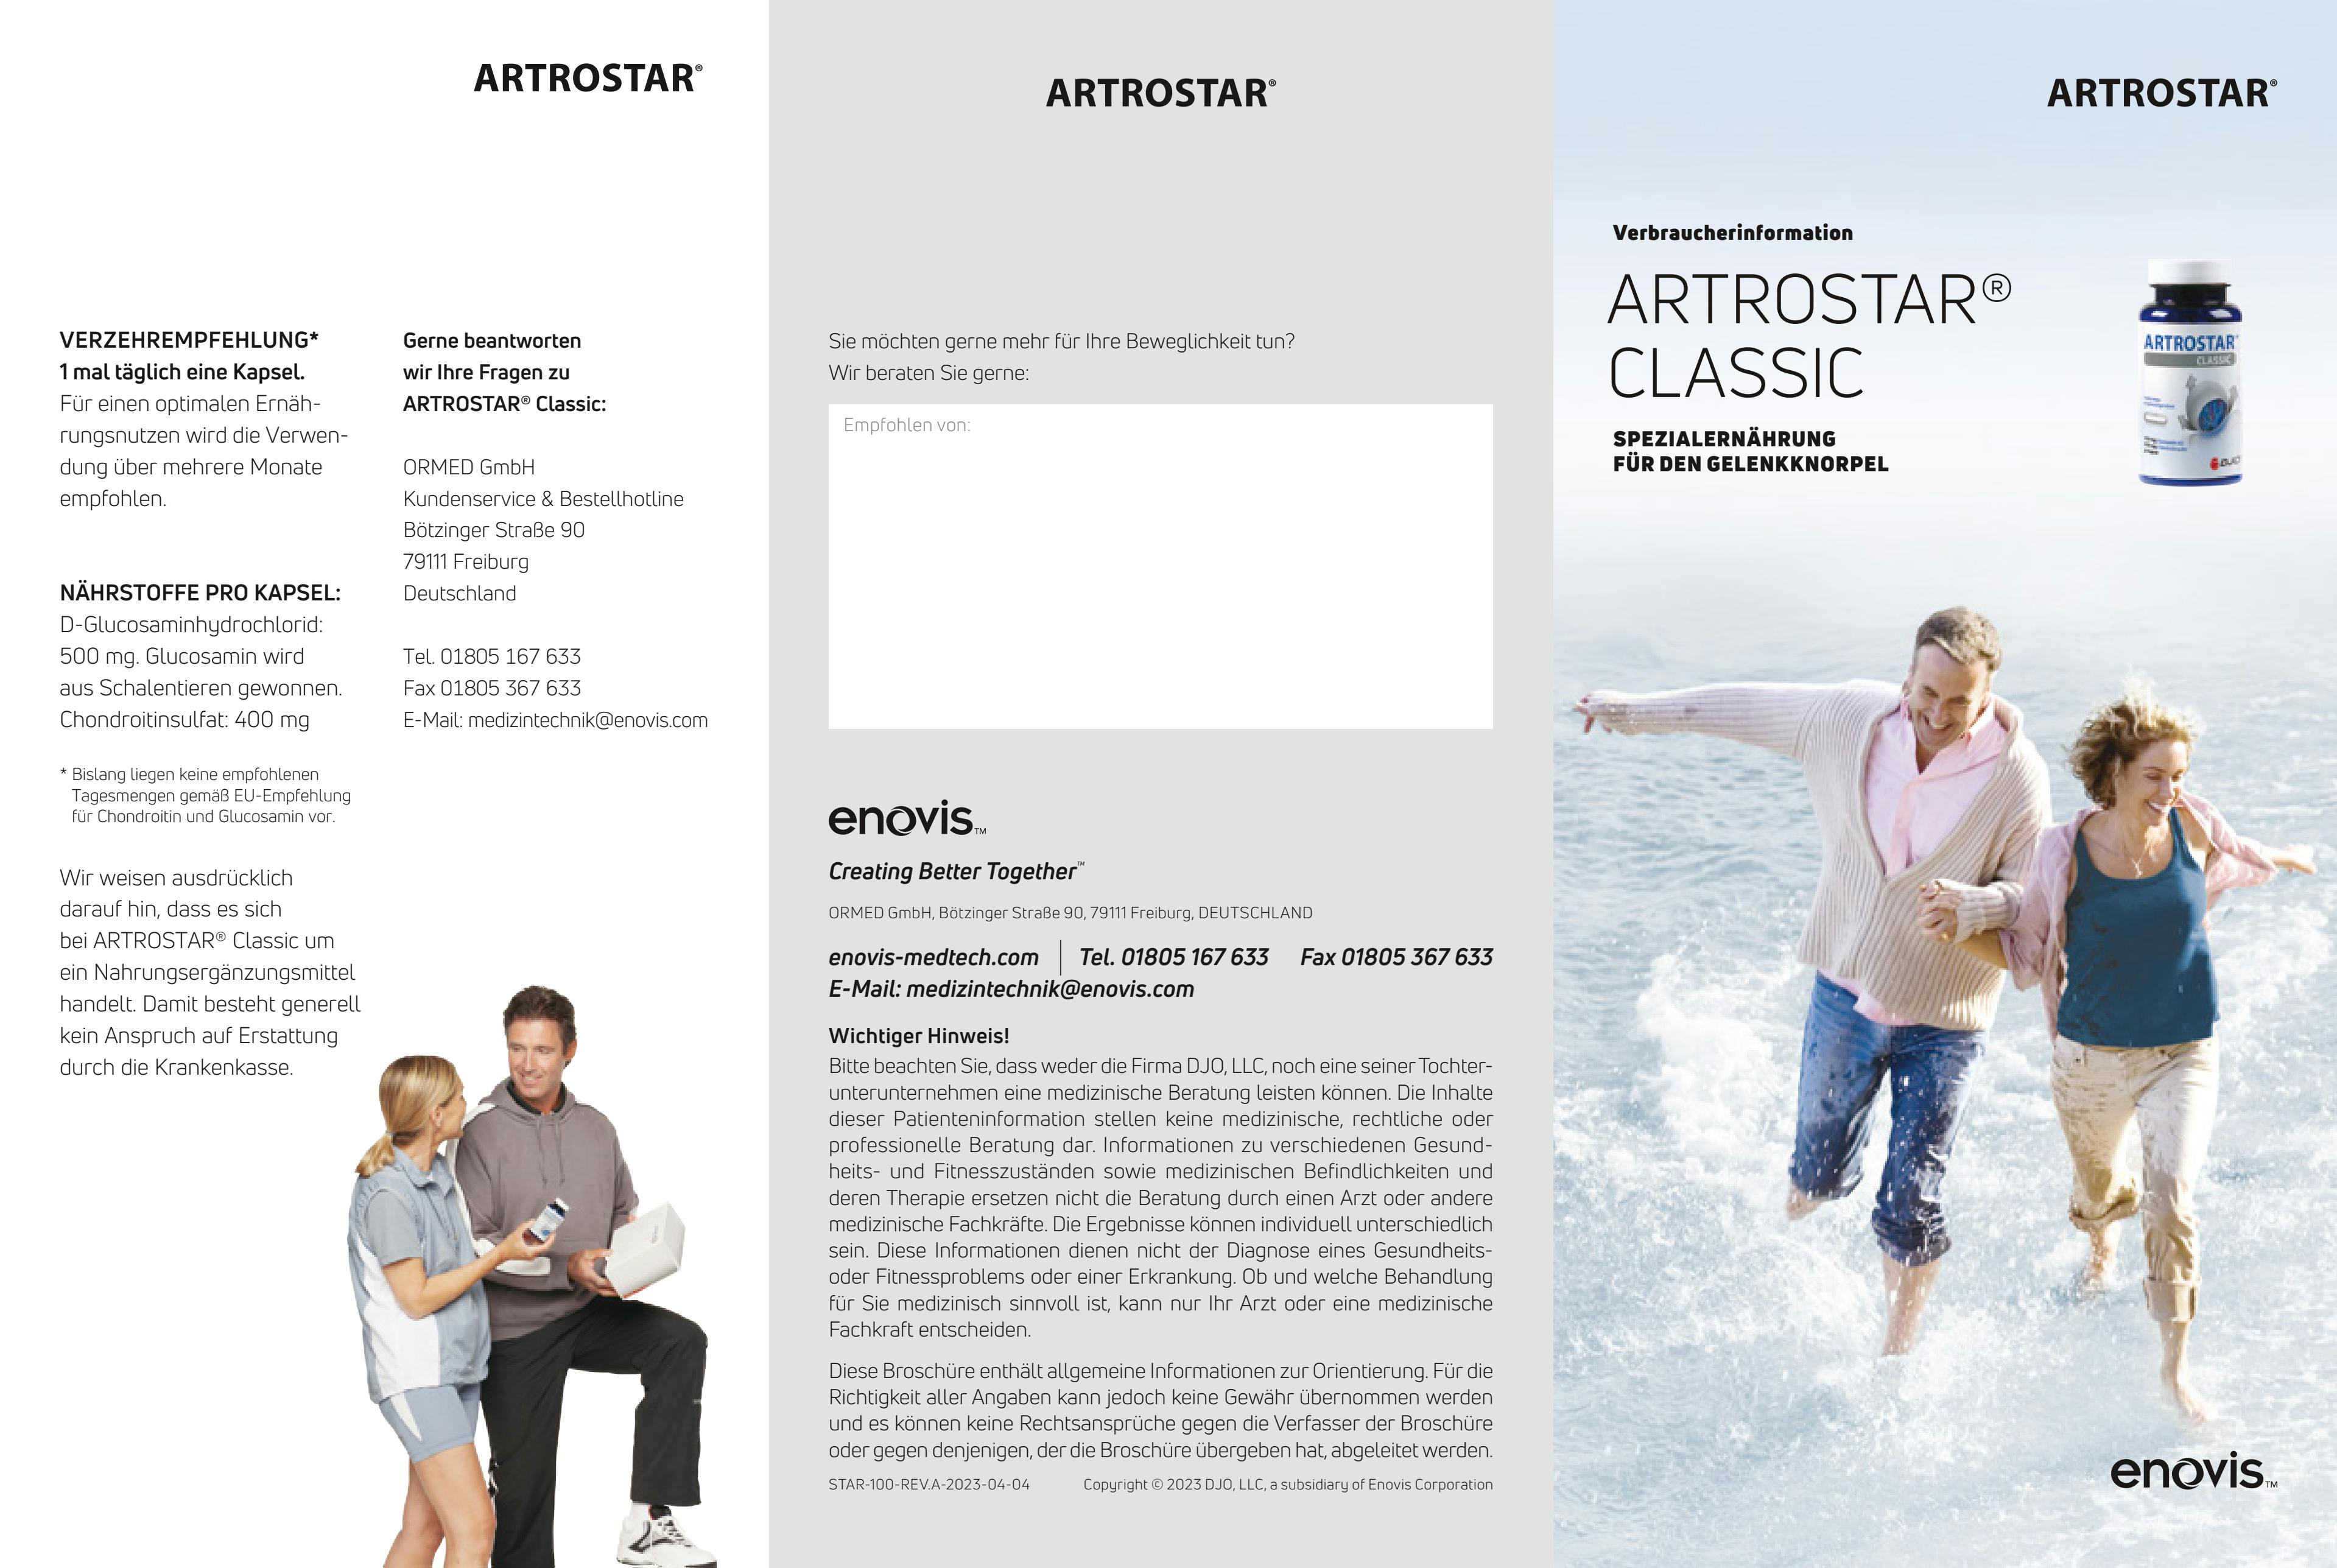 Artrostar Classic Verbraucherinformation_STAR-100-11-20.pdf